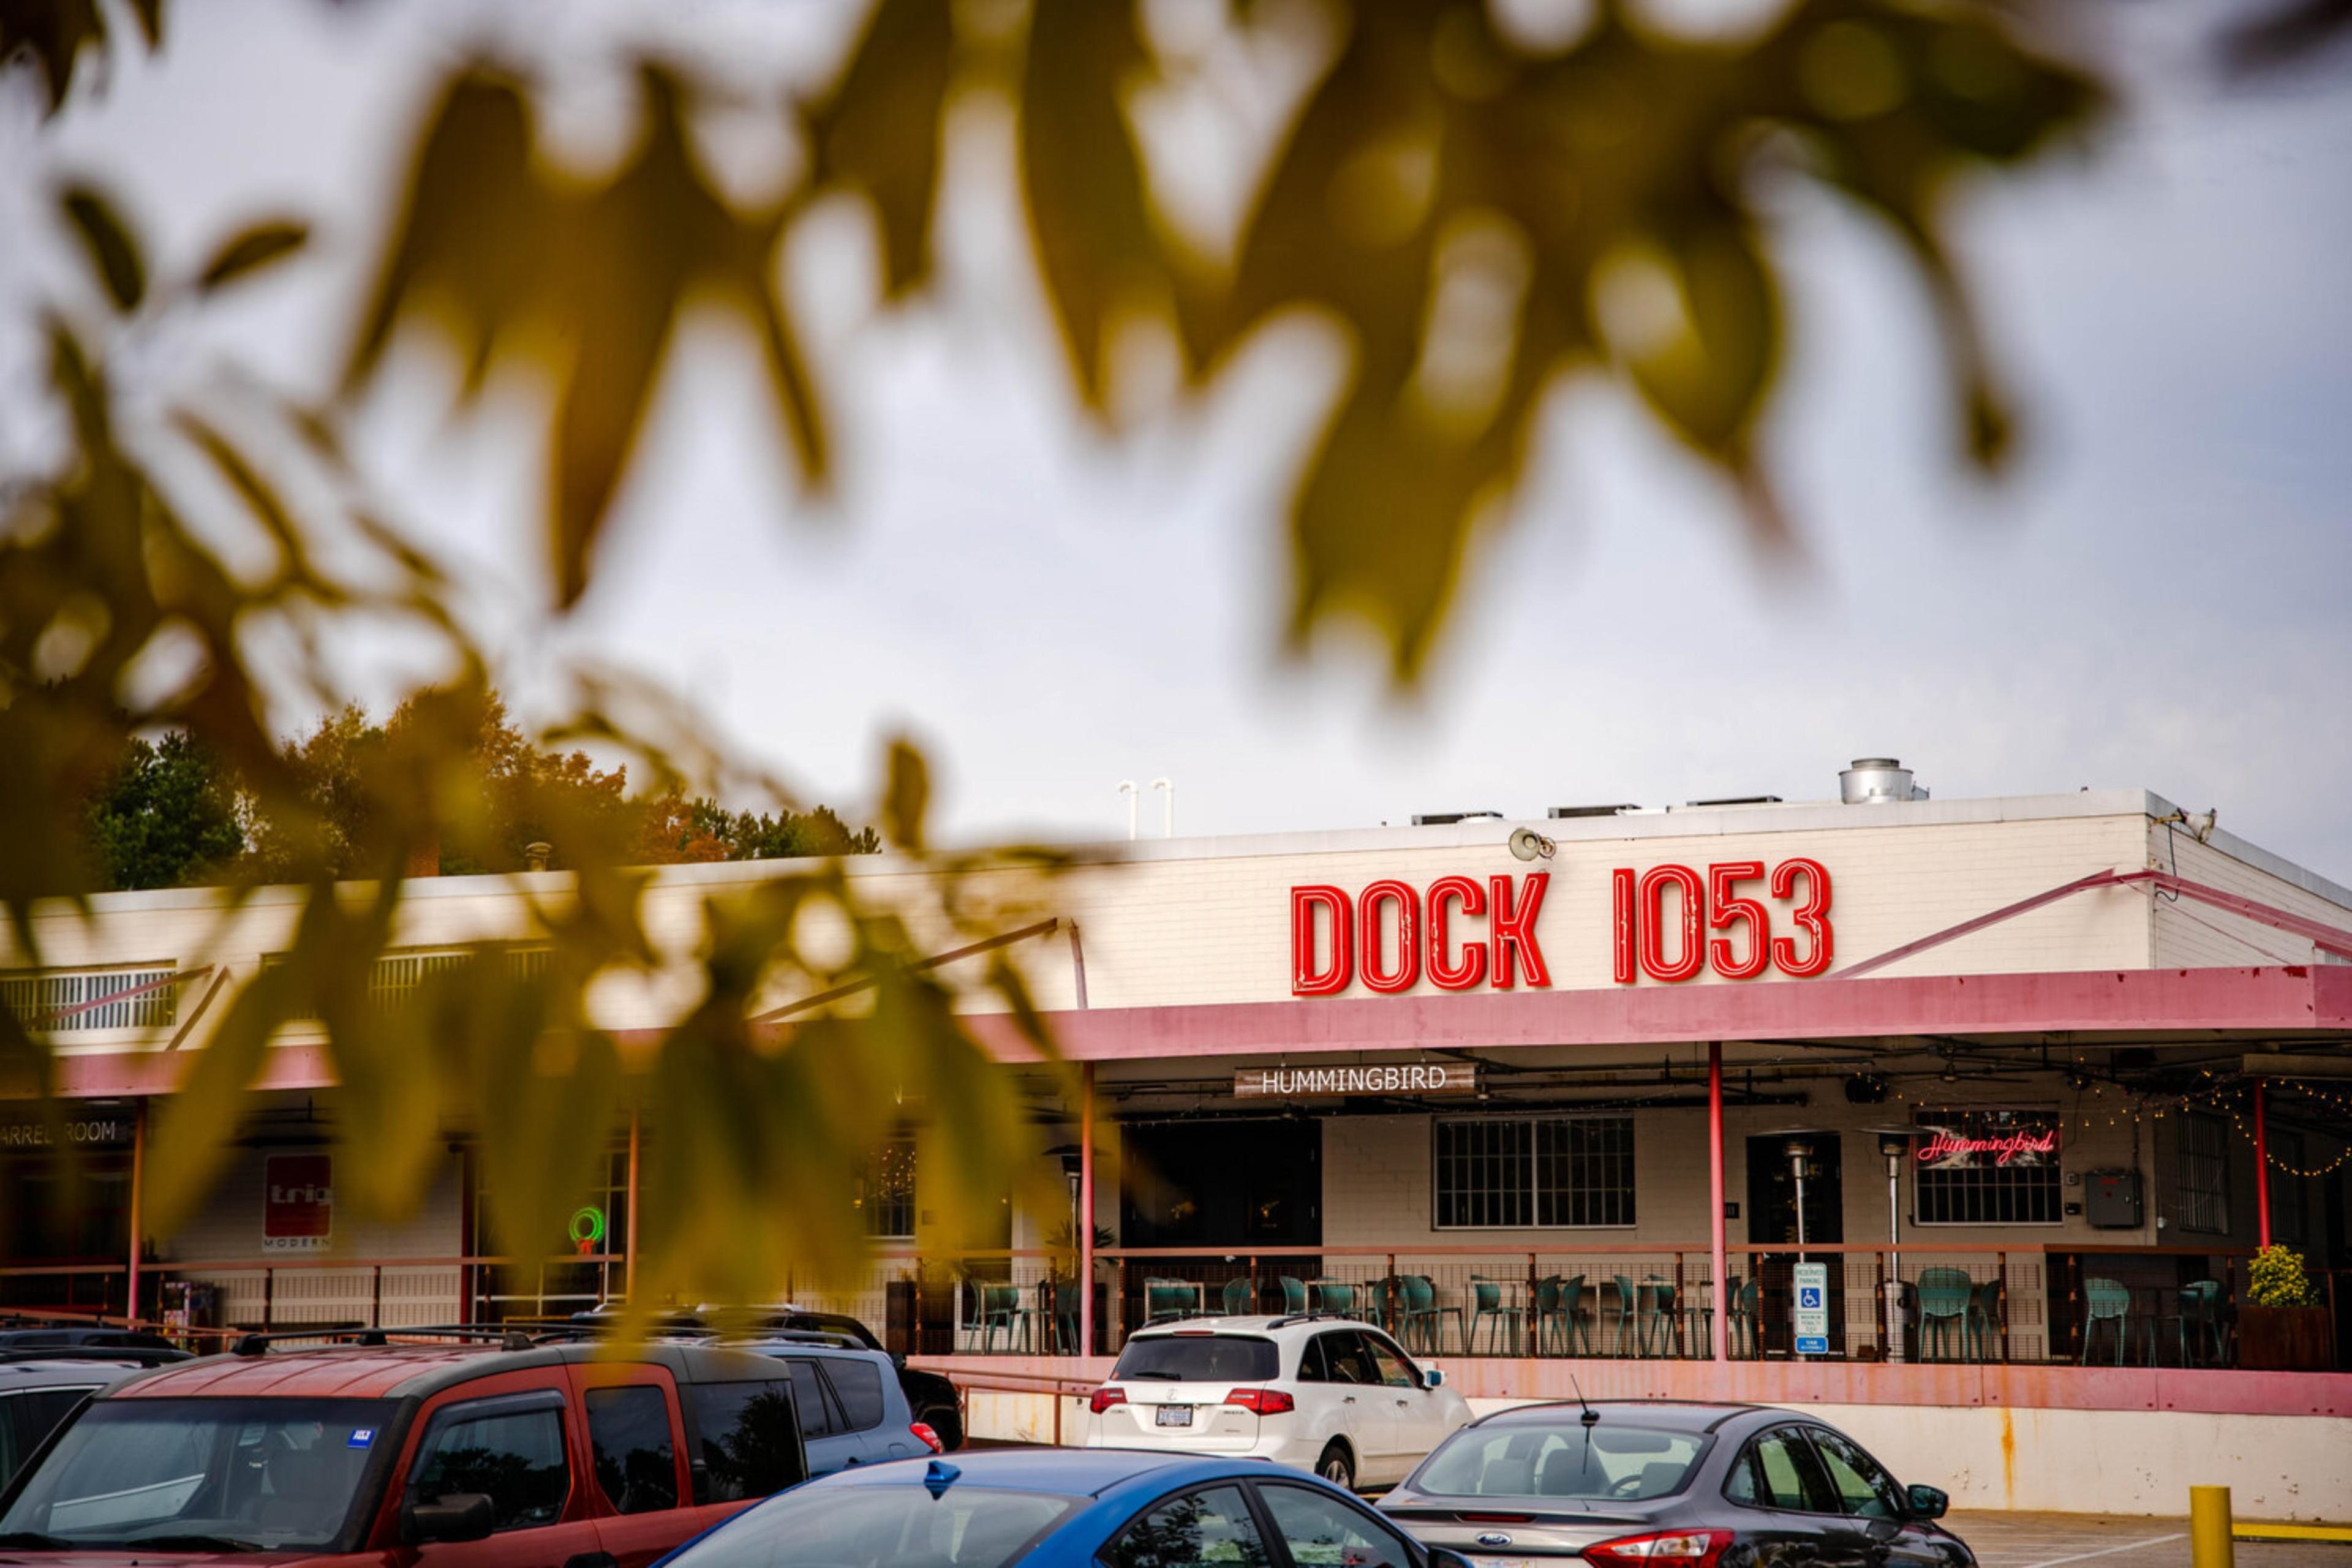 The Loading Dock — Dock 1053